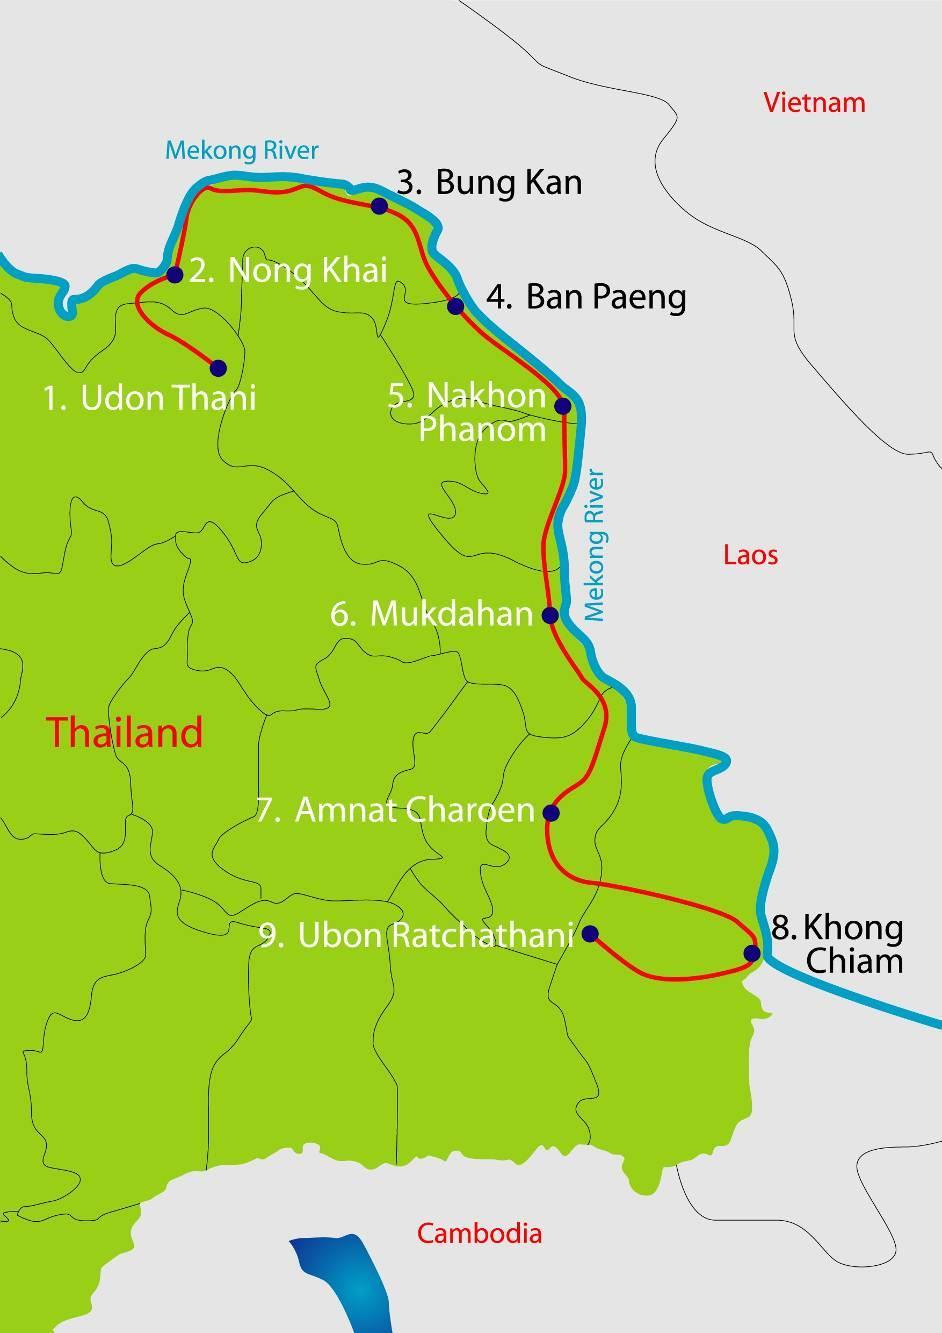 Siam Bike Tours Co. Ltd. Boat Avenue 49/4 Bandon-Choengthale Road Thalang, Choeng Thale Phuket 83110, Thailand phone: +66 (0) 89 7307 441 mail@siambiketours.